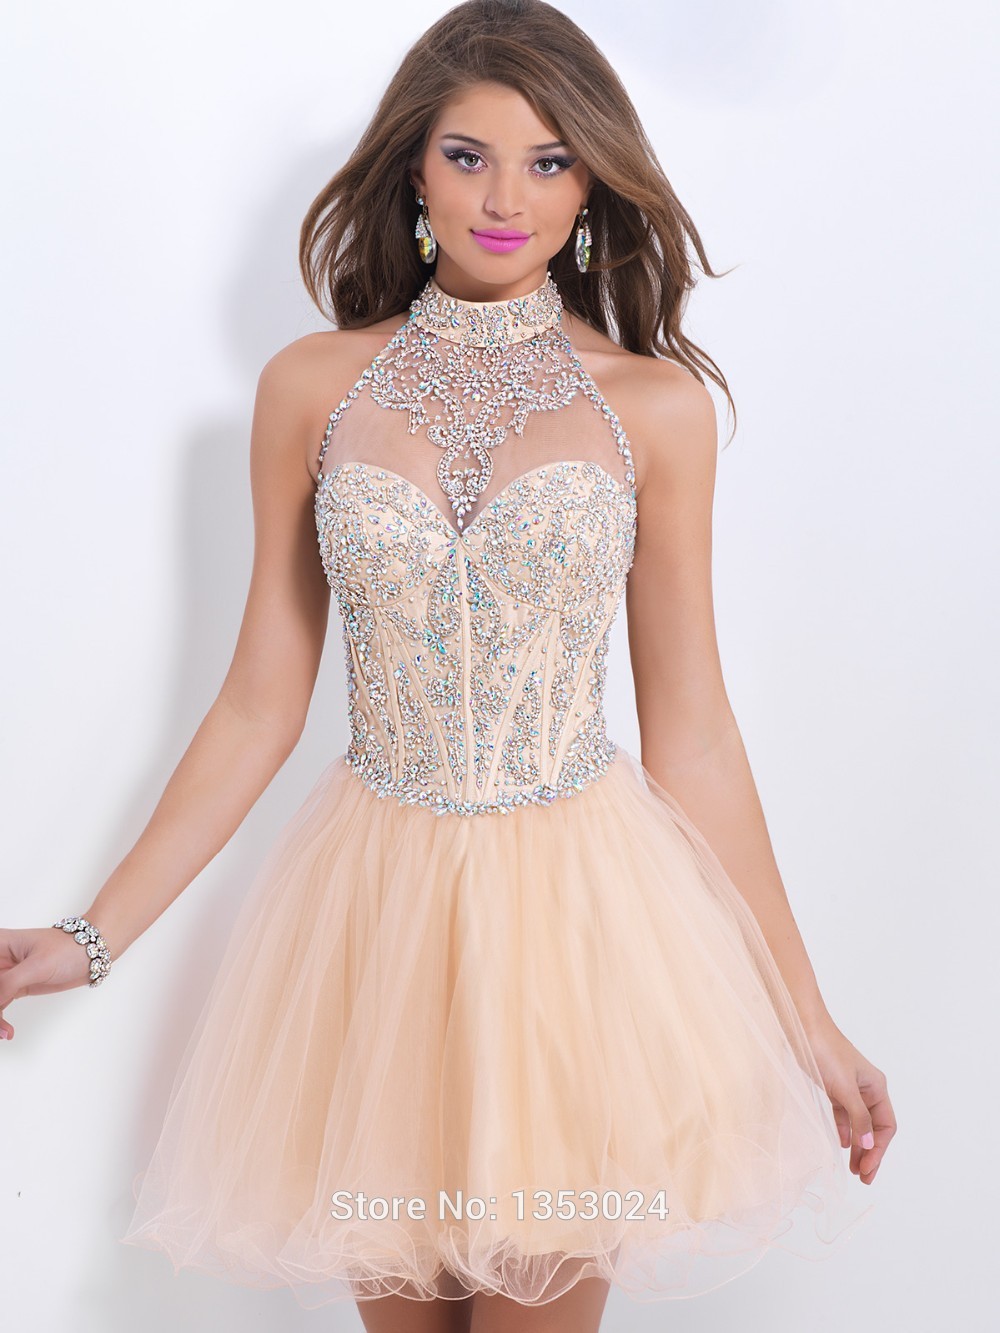 prom dress 2015 fashion elegant graduation dresses Luxury beaded short